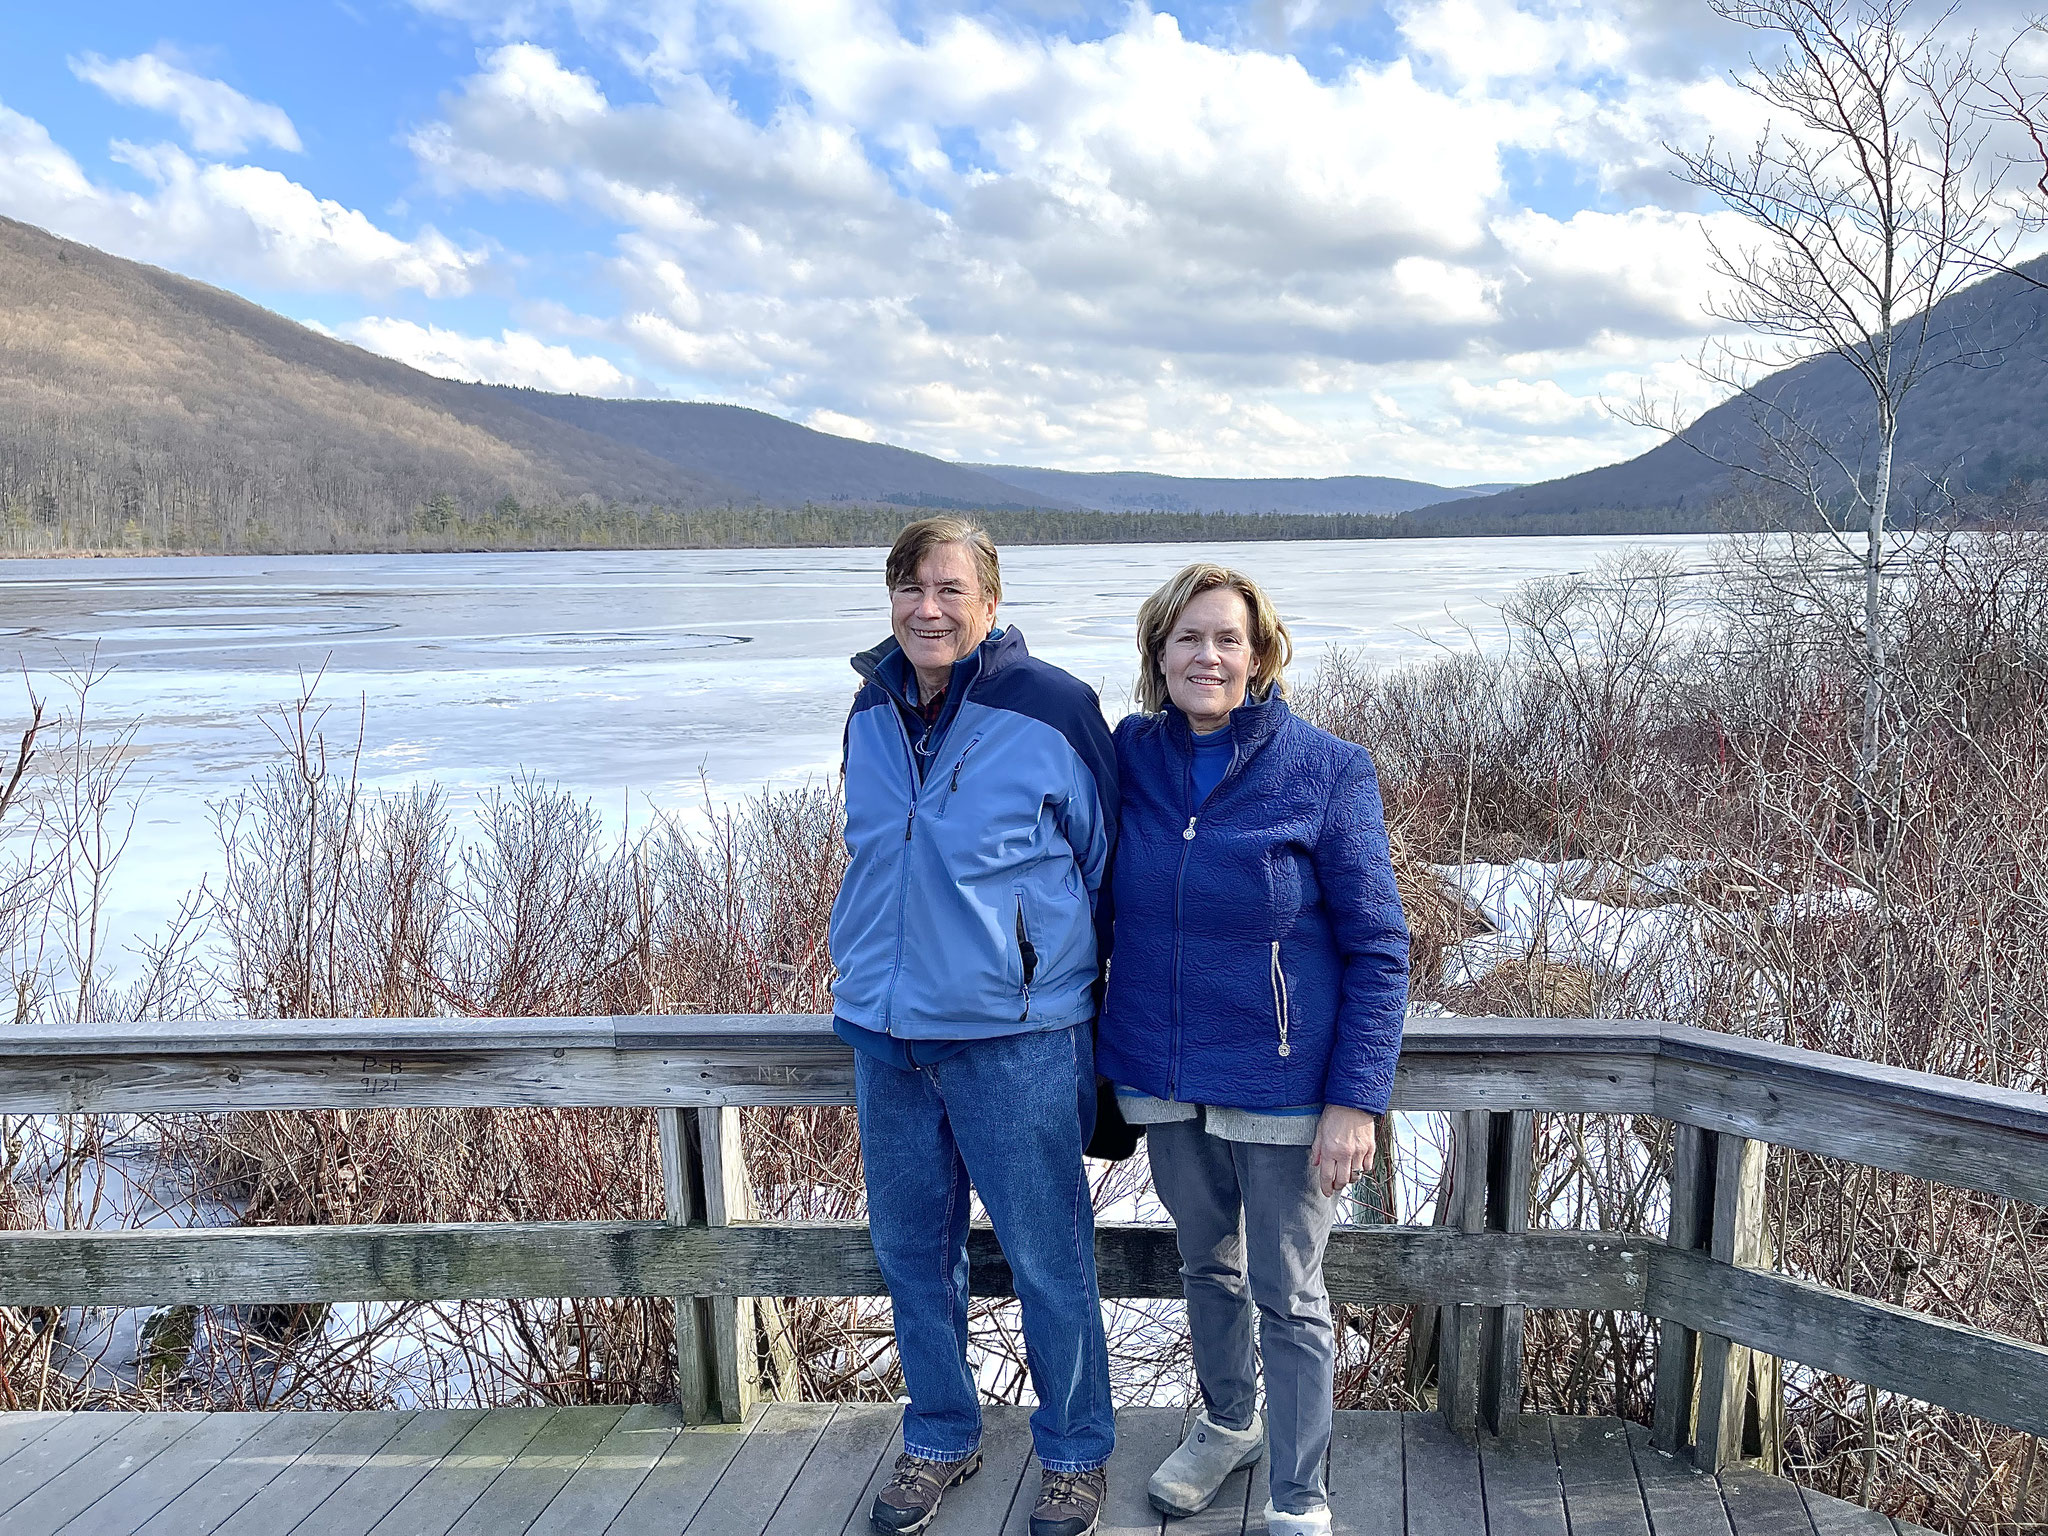 John & Lorraine at Labrador Hollow, near Syracuse, Feb. 20, 2023